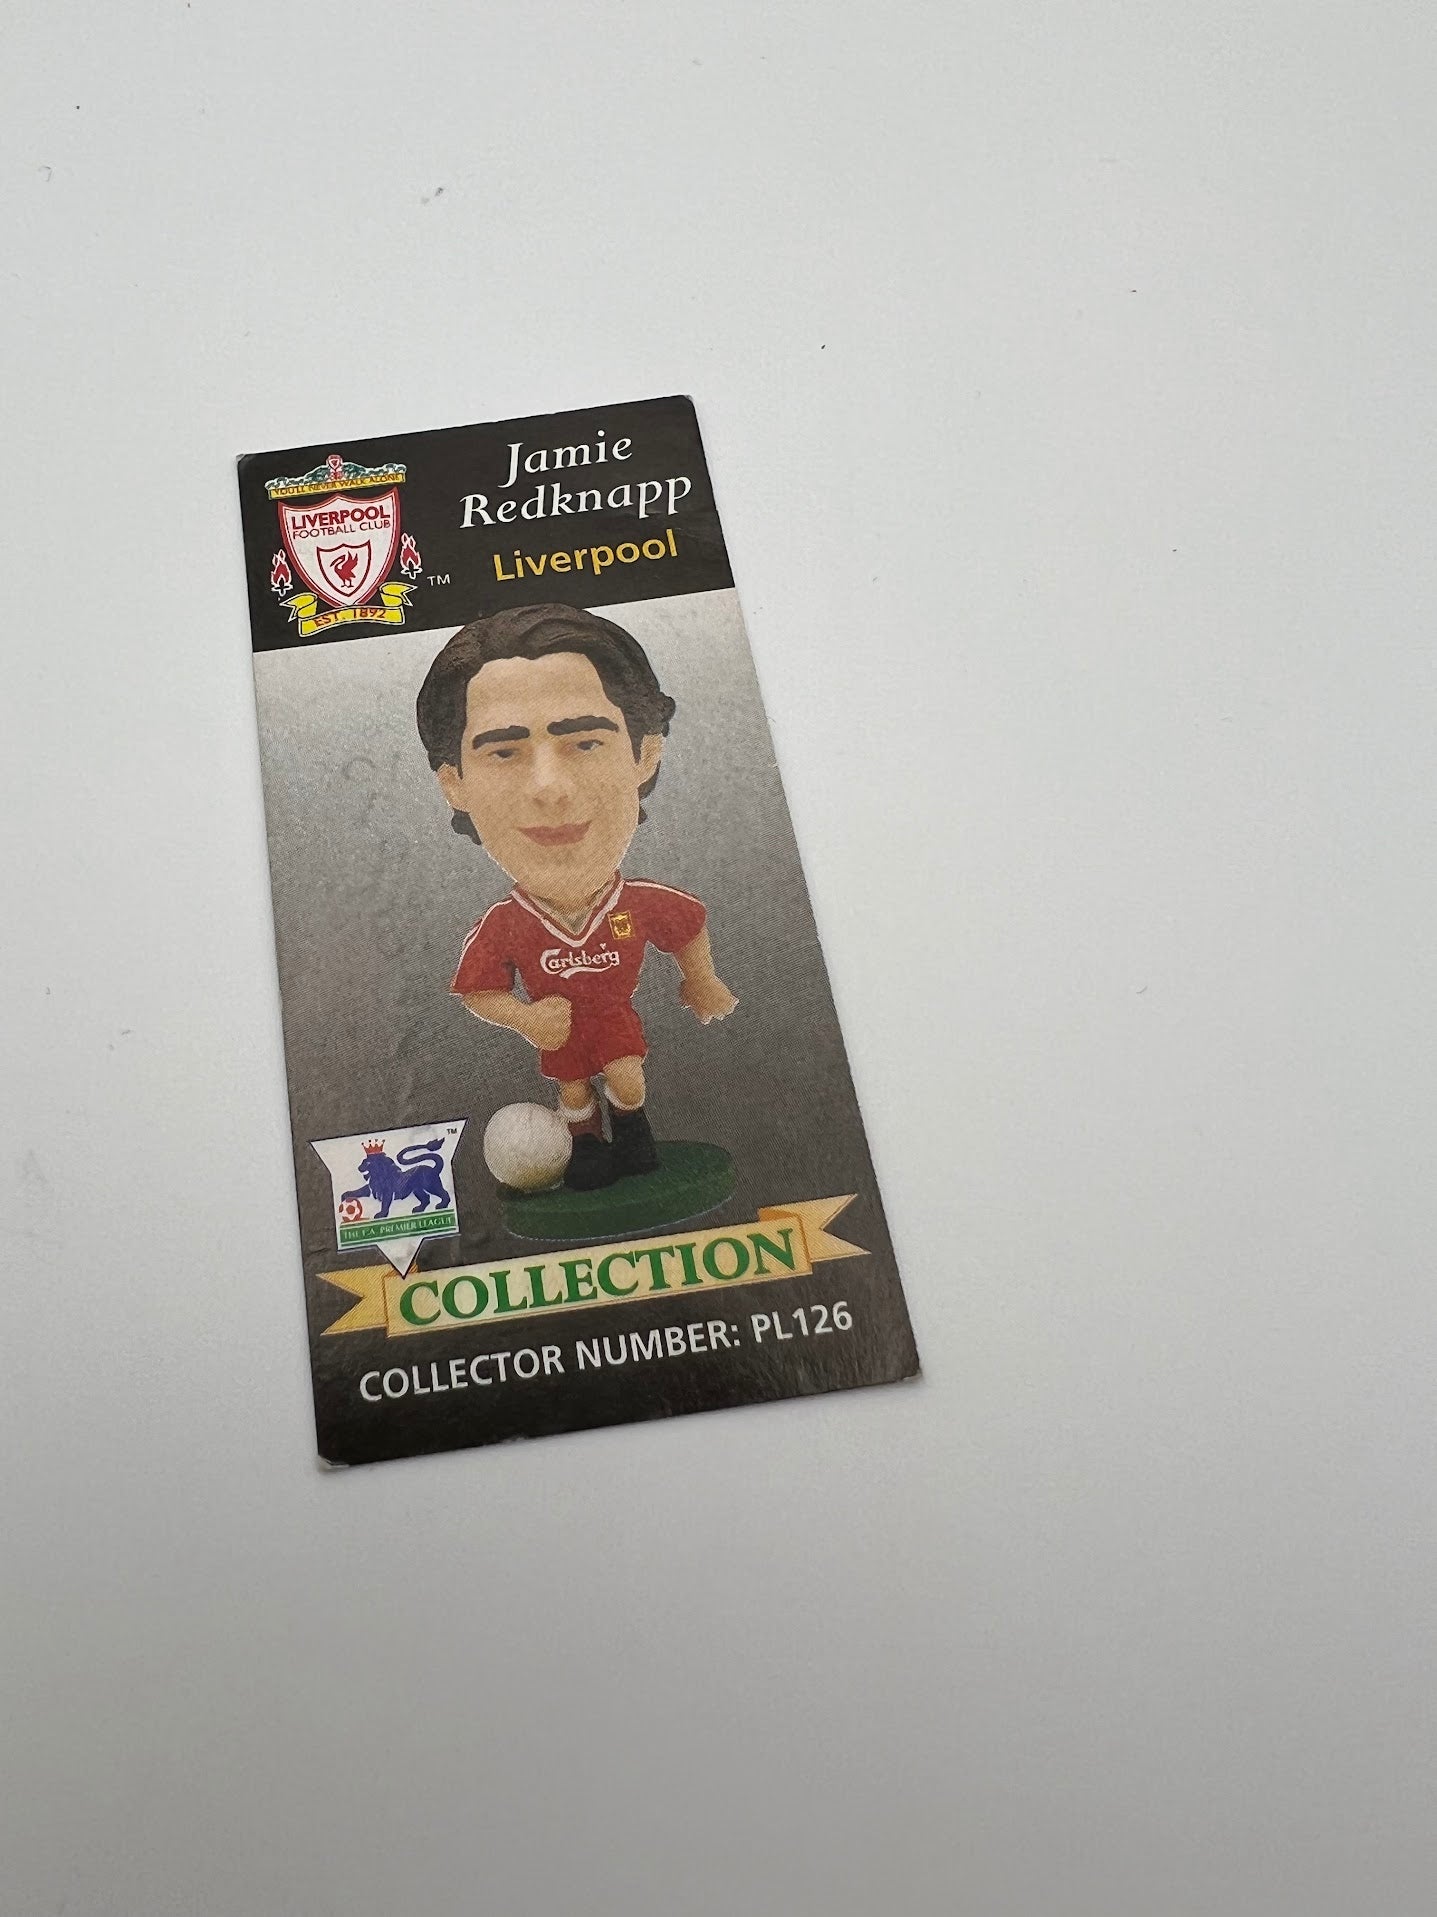 Jamie Redknapp Collector Card - Liverpool - Corinthian Figure Card - PL126